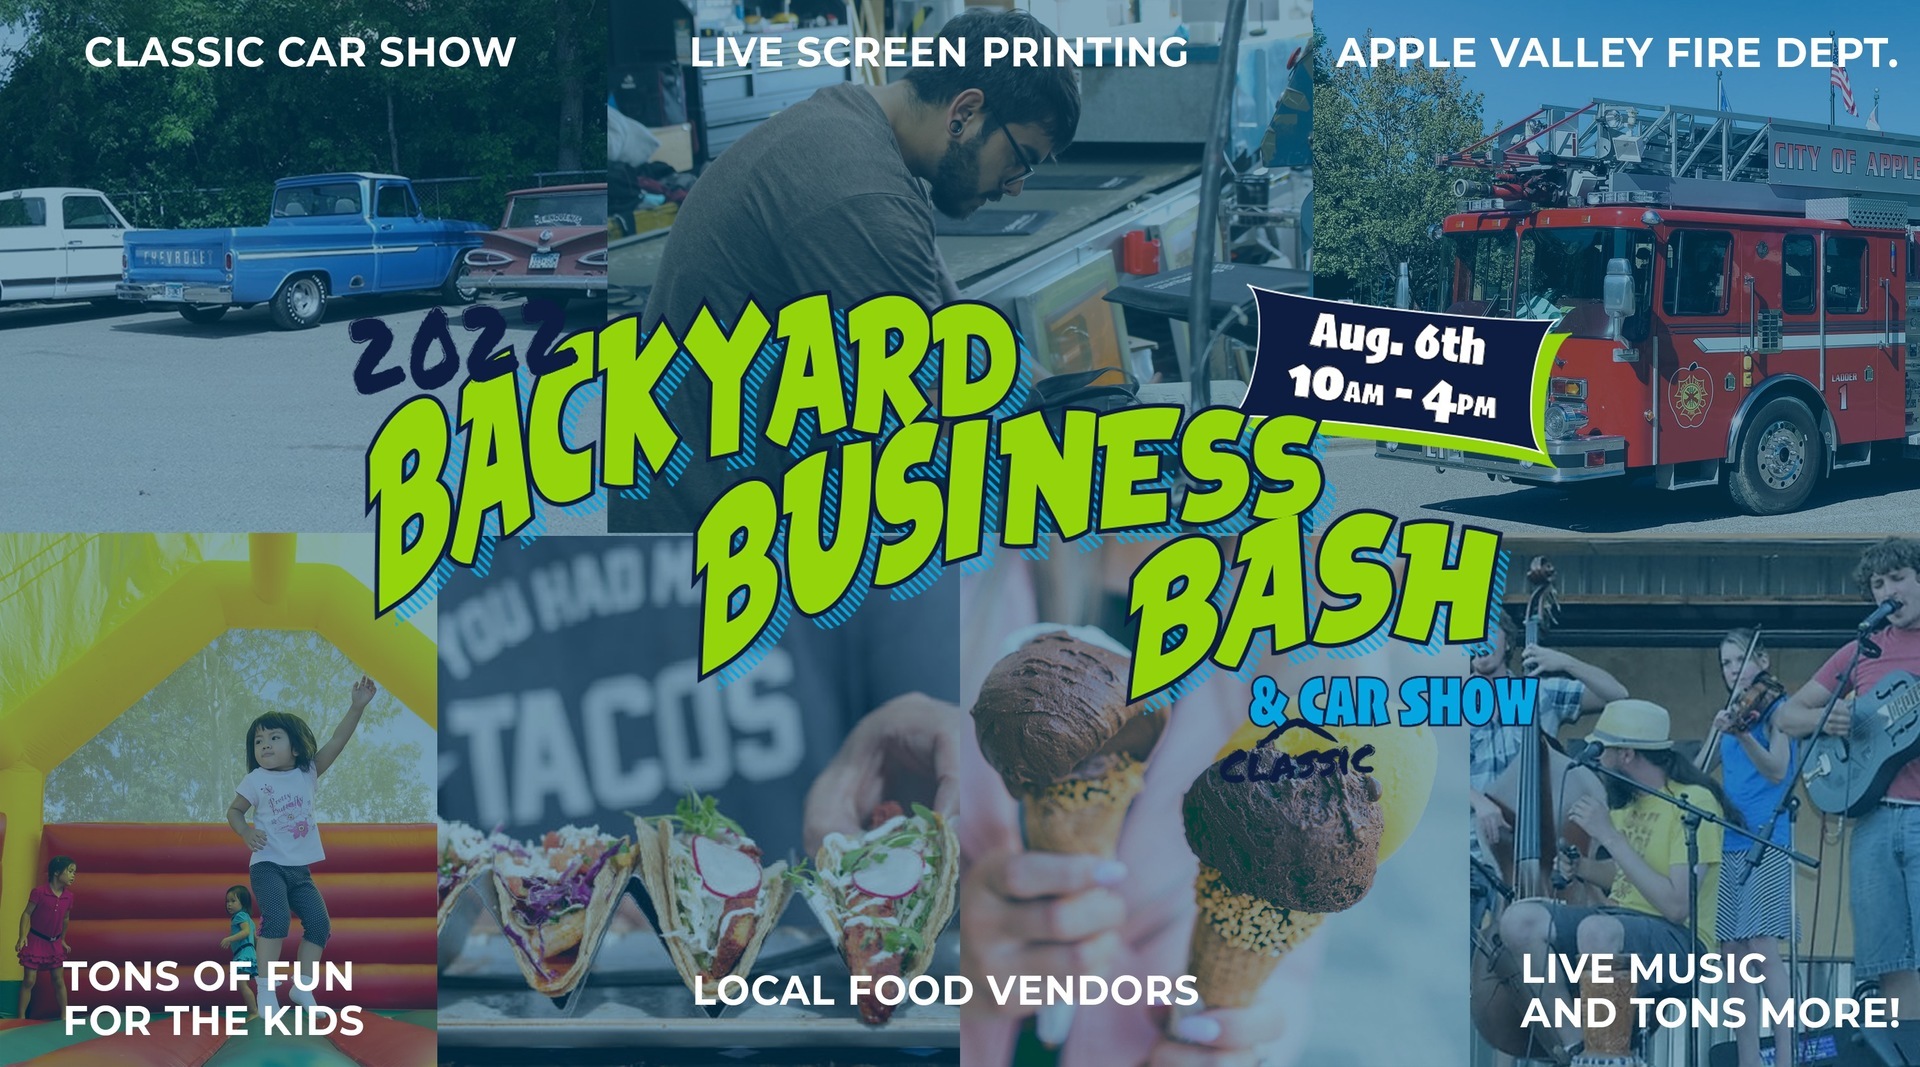 Backyard Business Bash & Classic Car Show!, Apple Valley, Minnesota, United States